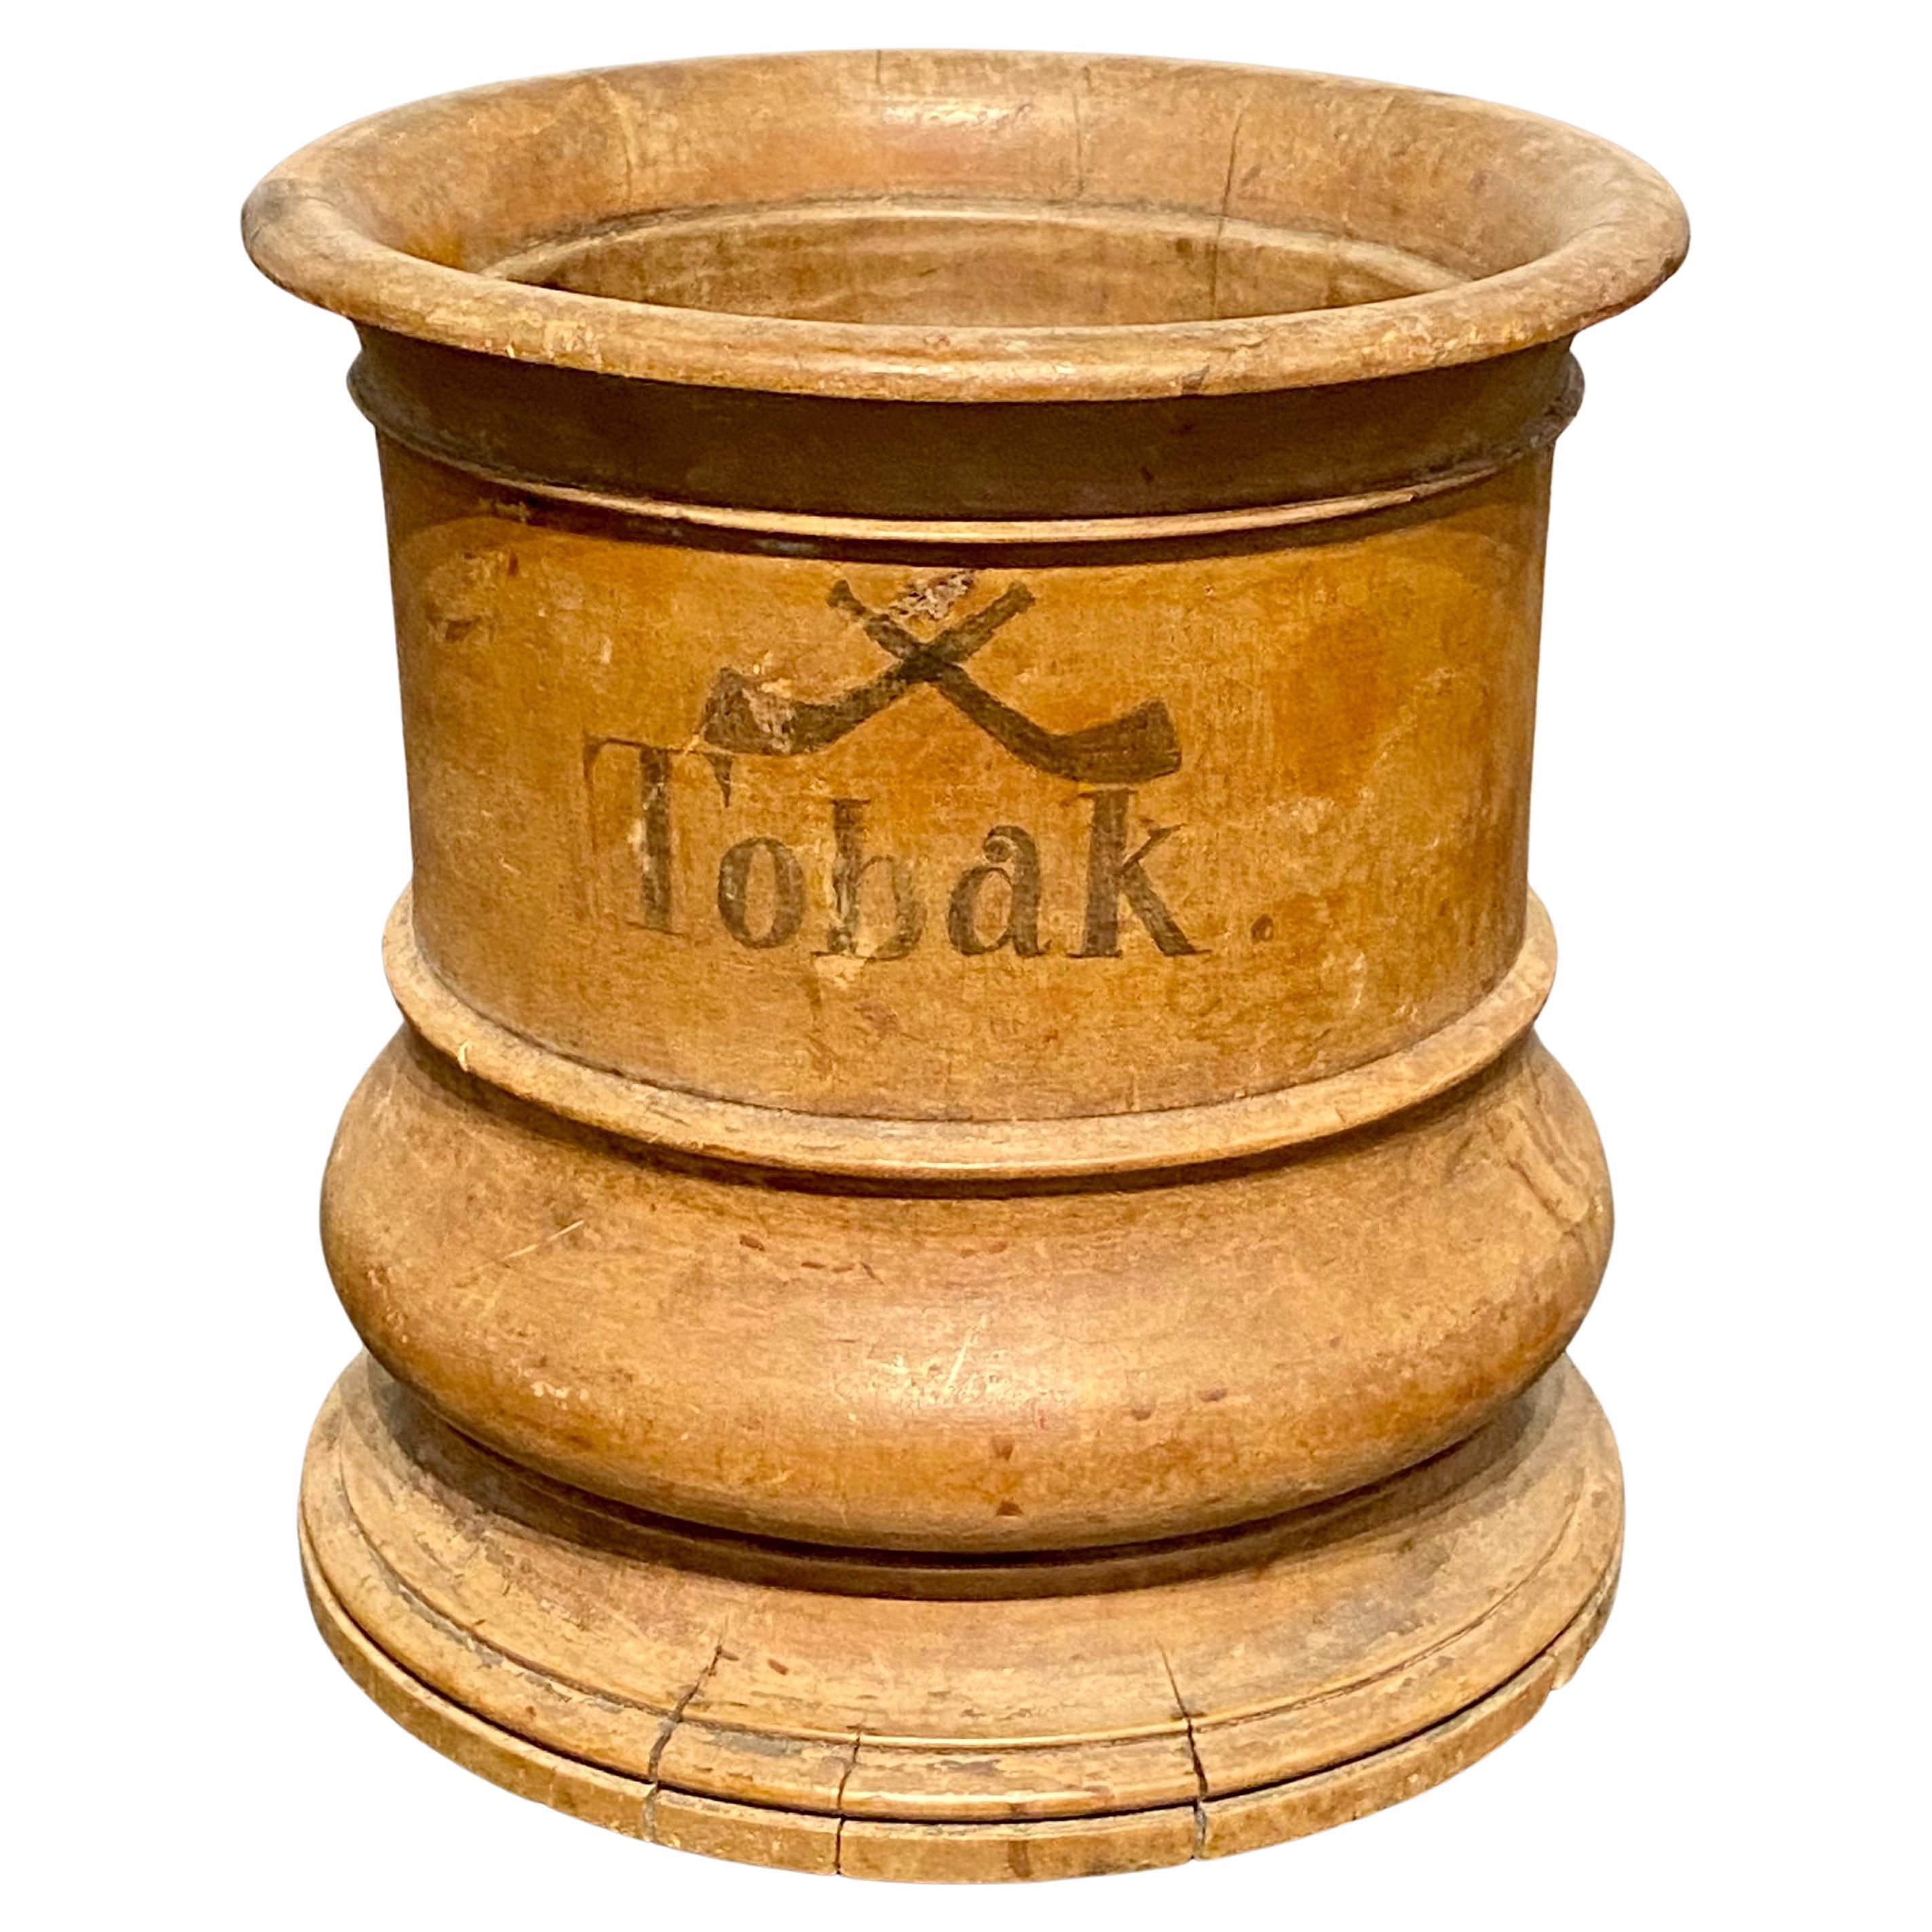 Dänisches Holz-Tabakglas, um 1800-1825